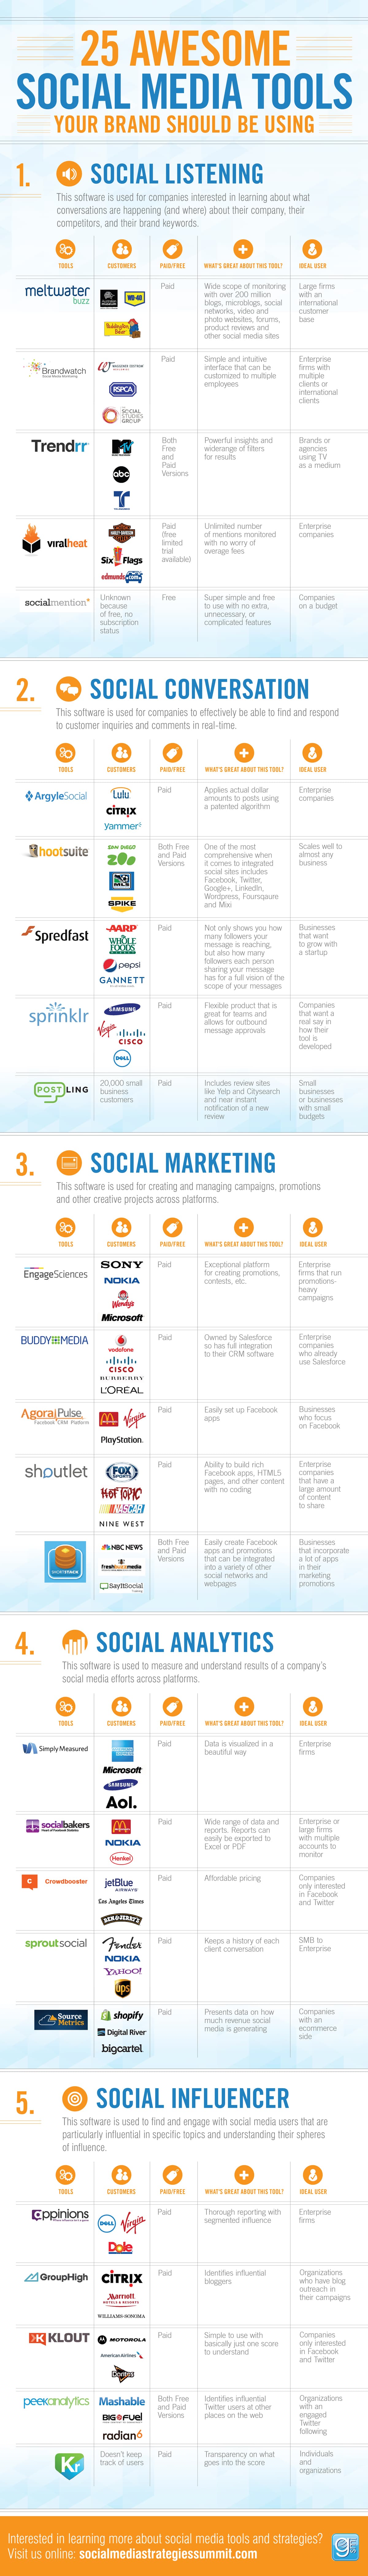 25 Social Media Tools Infographic